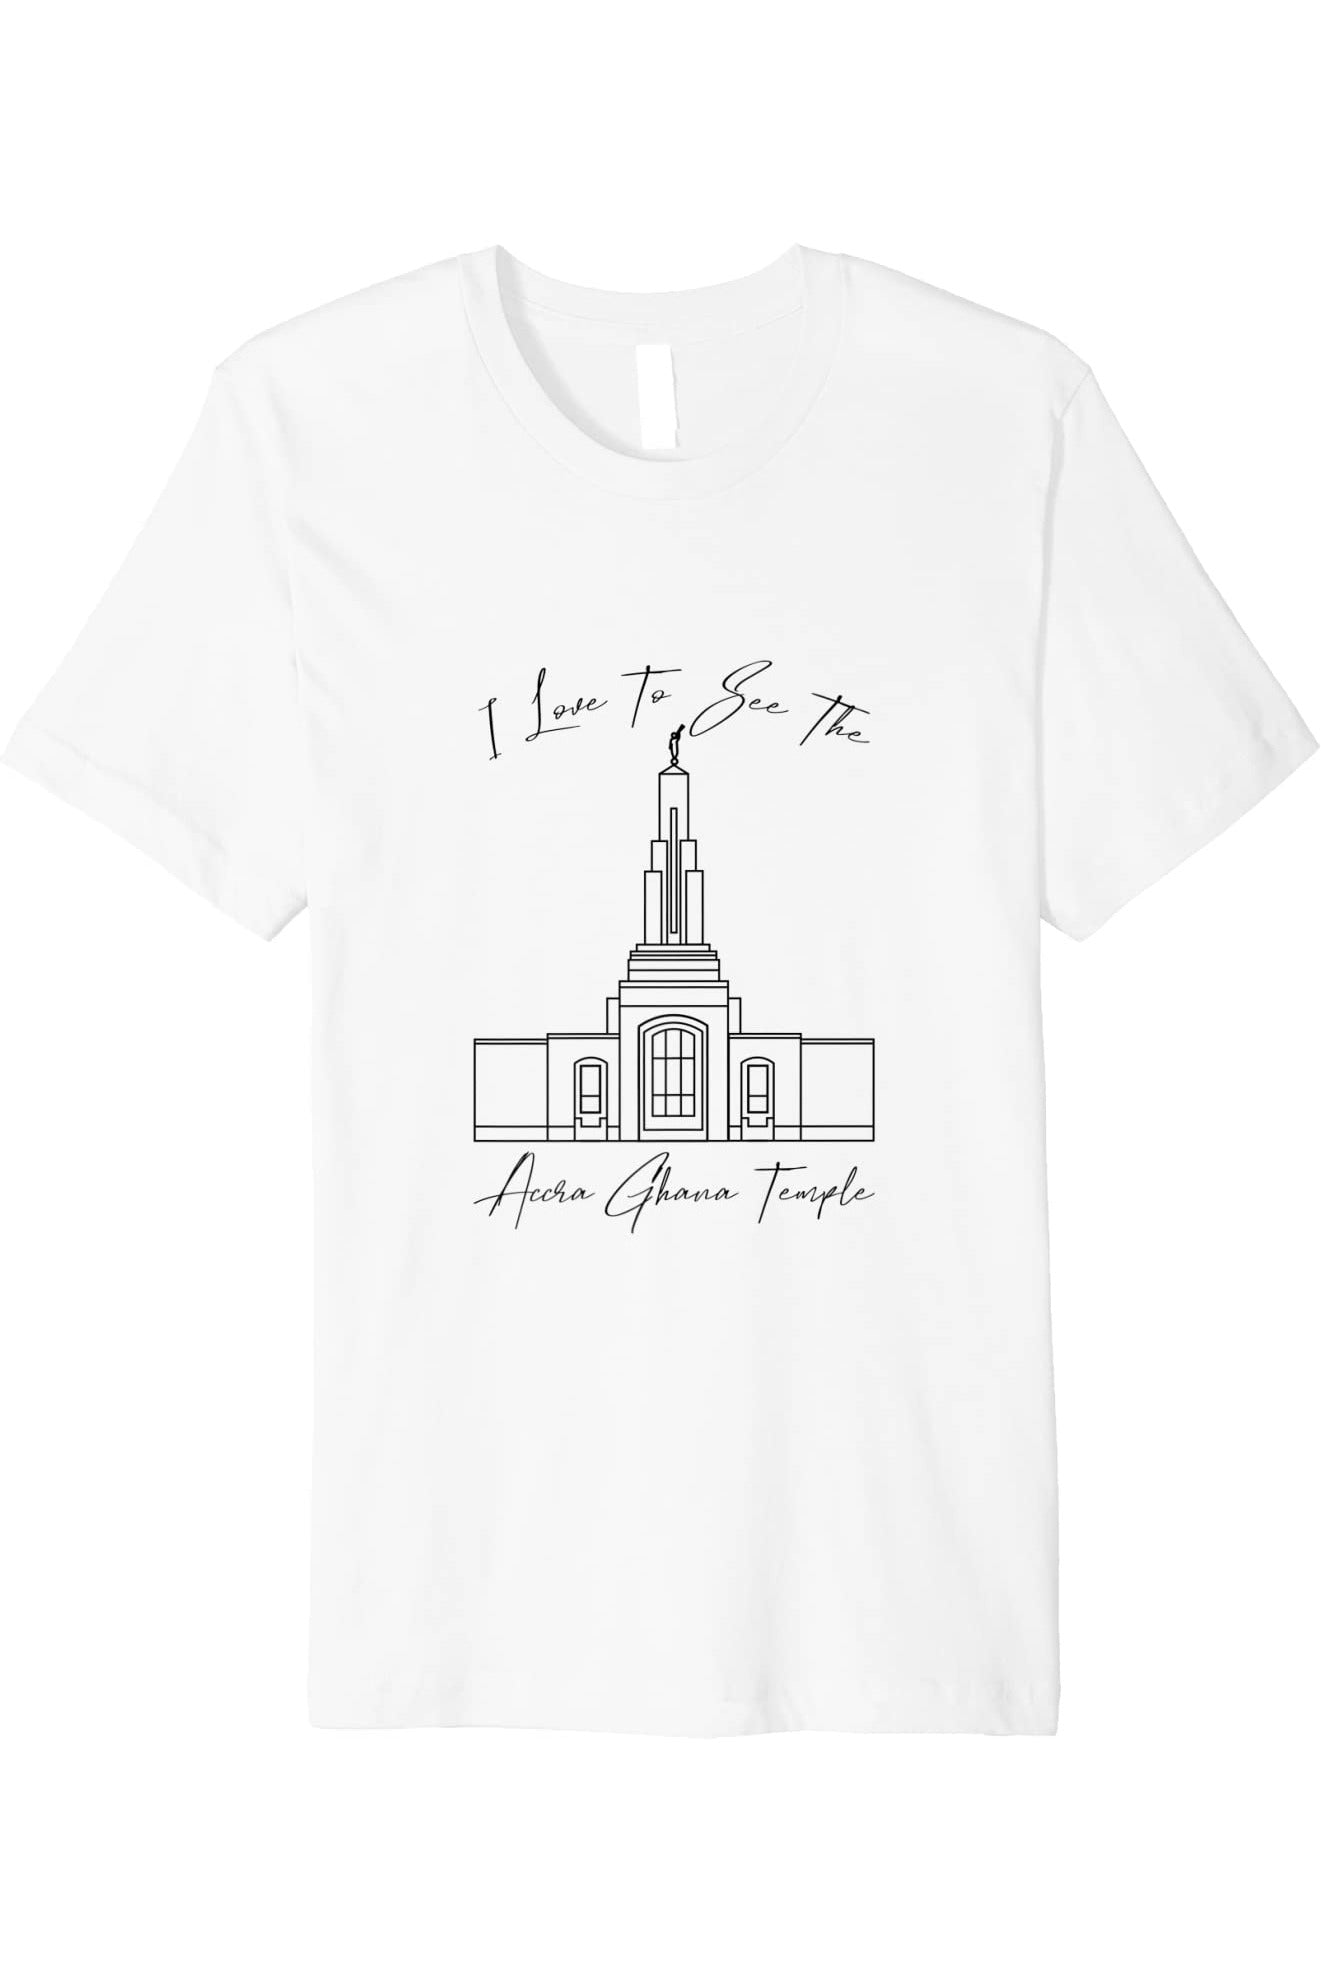 Accra Ghana Temple T-Shirt - Premium - Calligraphy Style (English) US